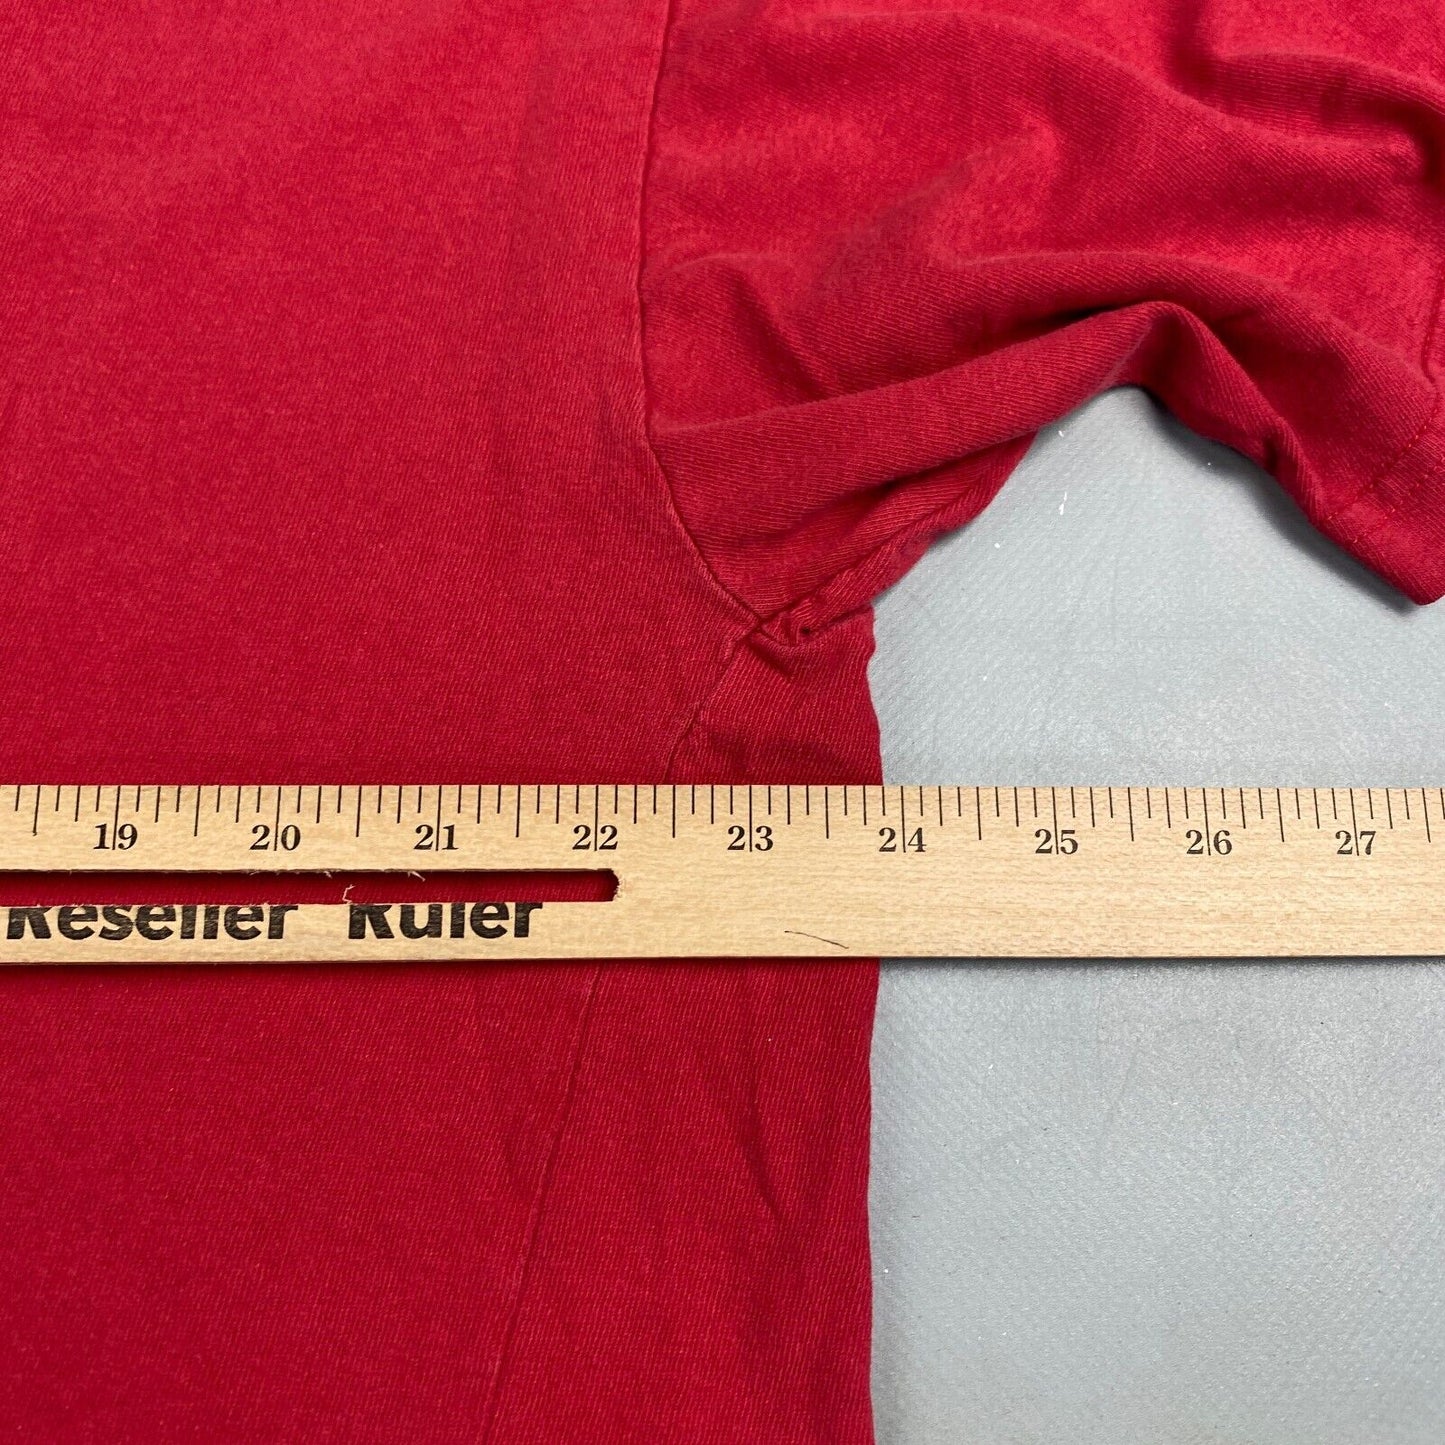 VINTAGE 90s NHL Montreal Canadians Big Logo Red T-Shirt sz XL Adult